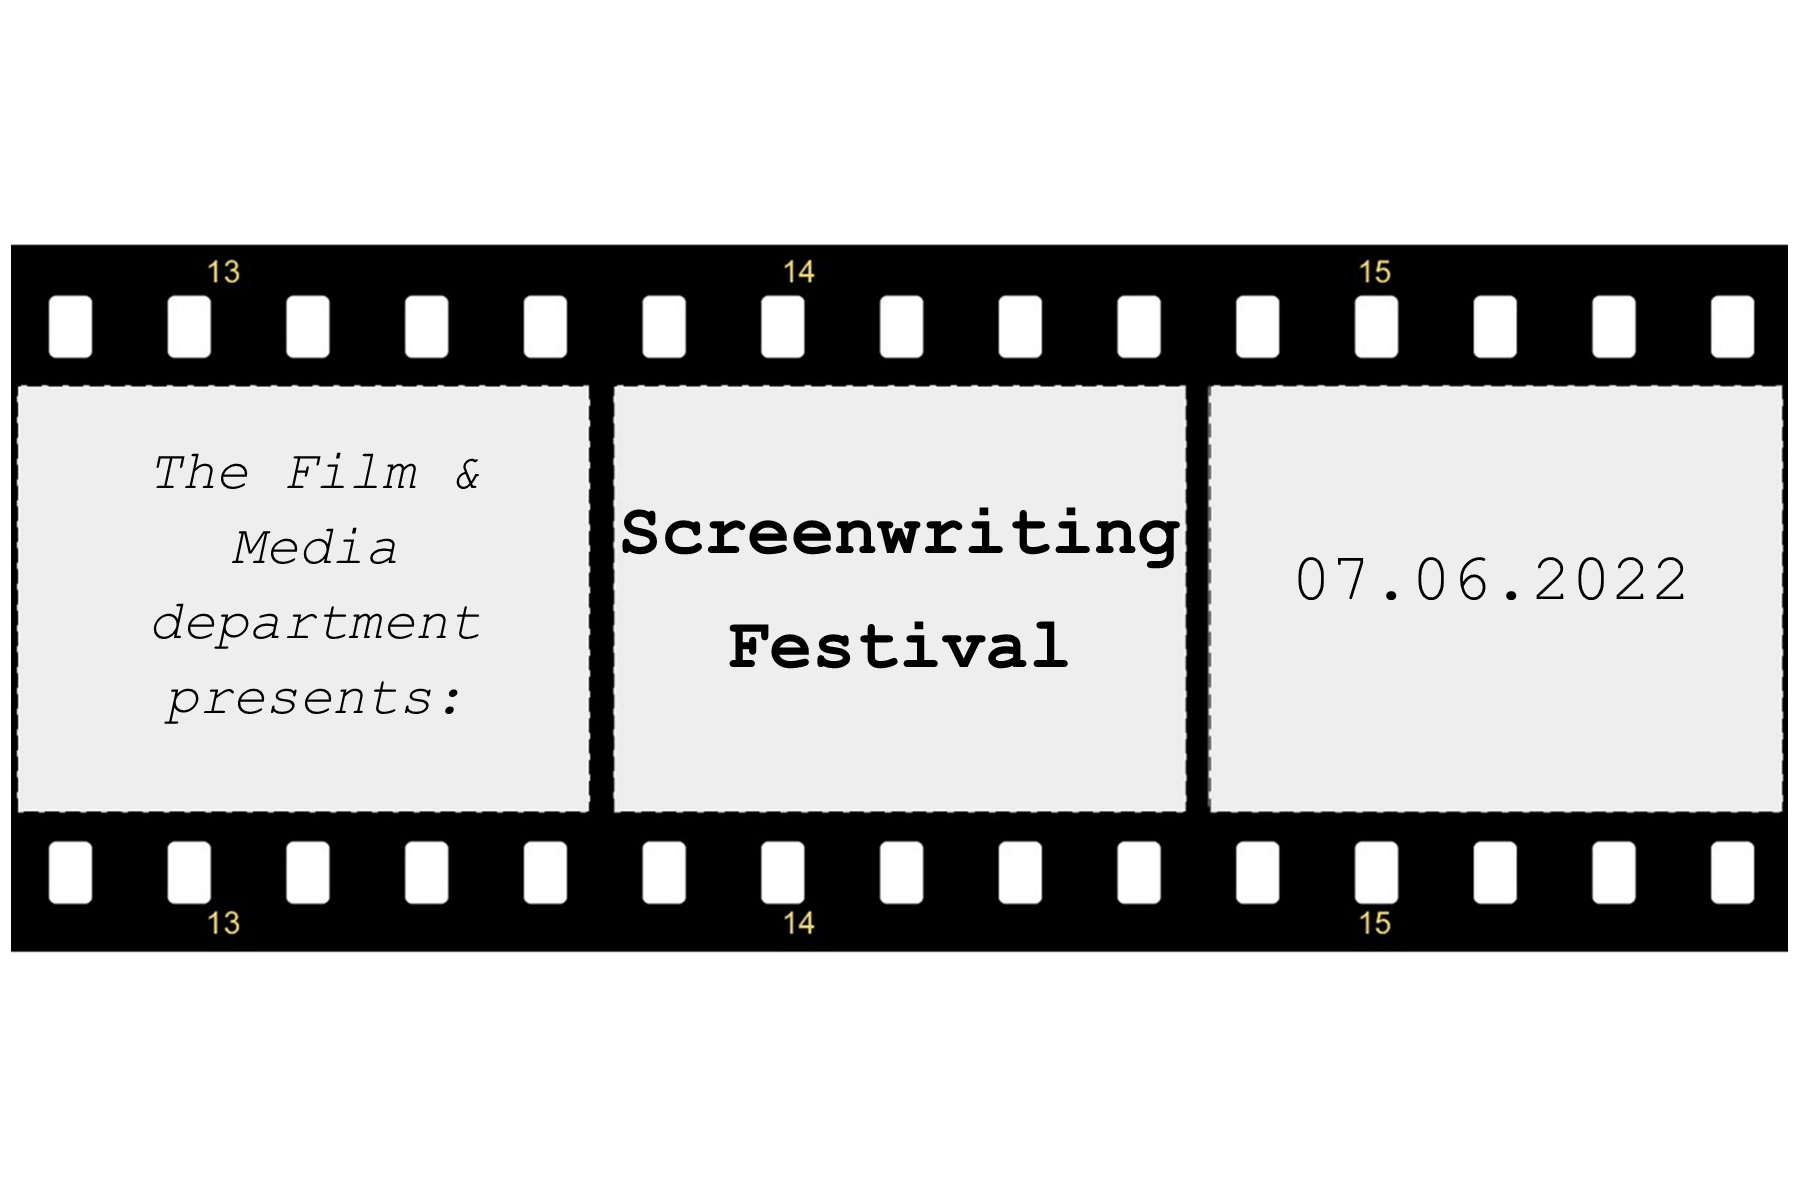 The Film and Media department presents Screenwriting Festival, 7 June 2022